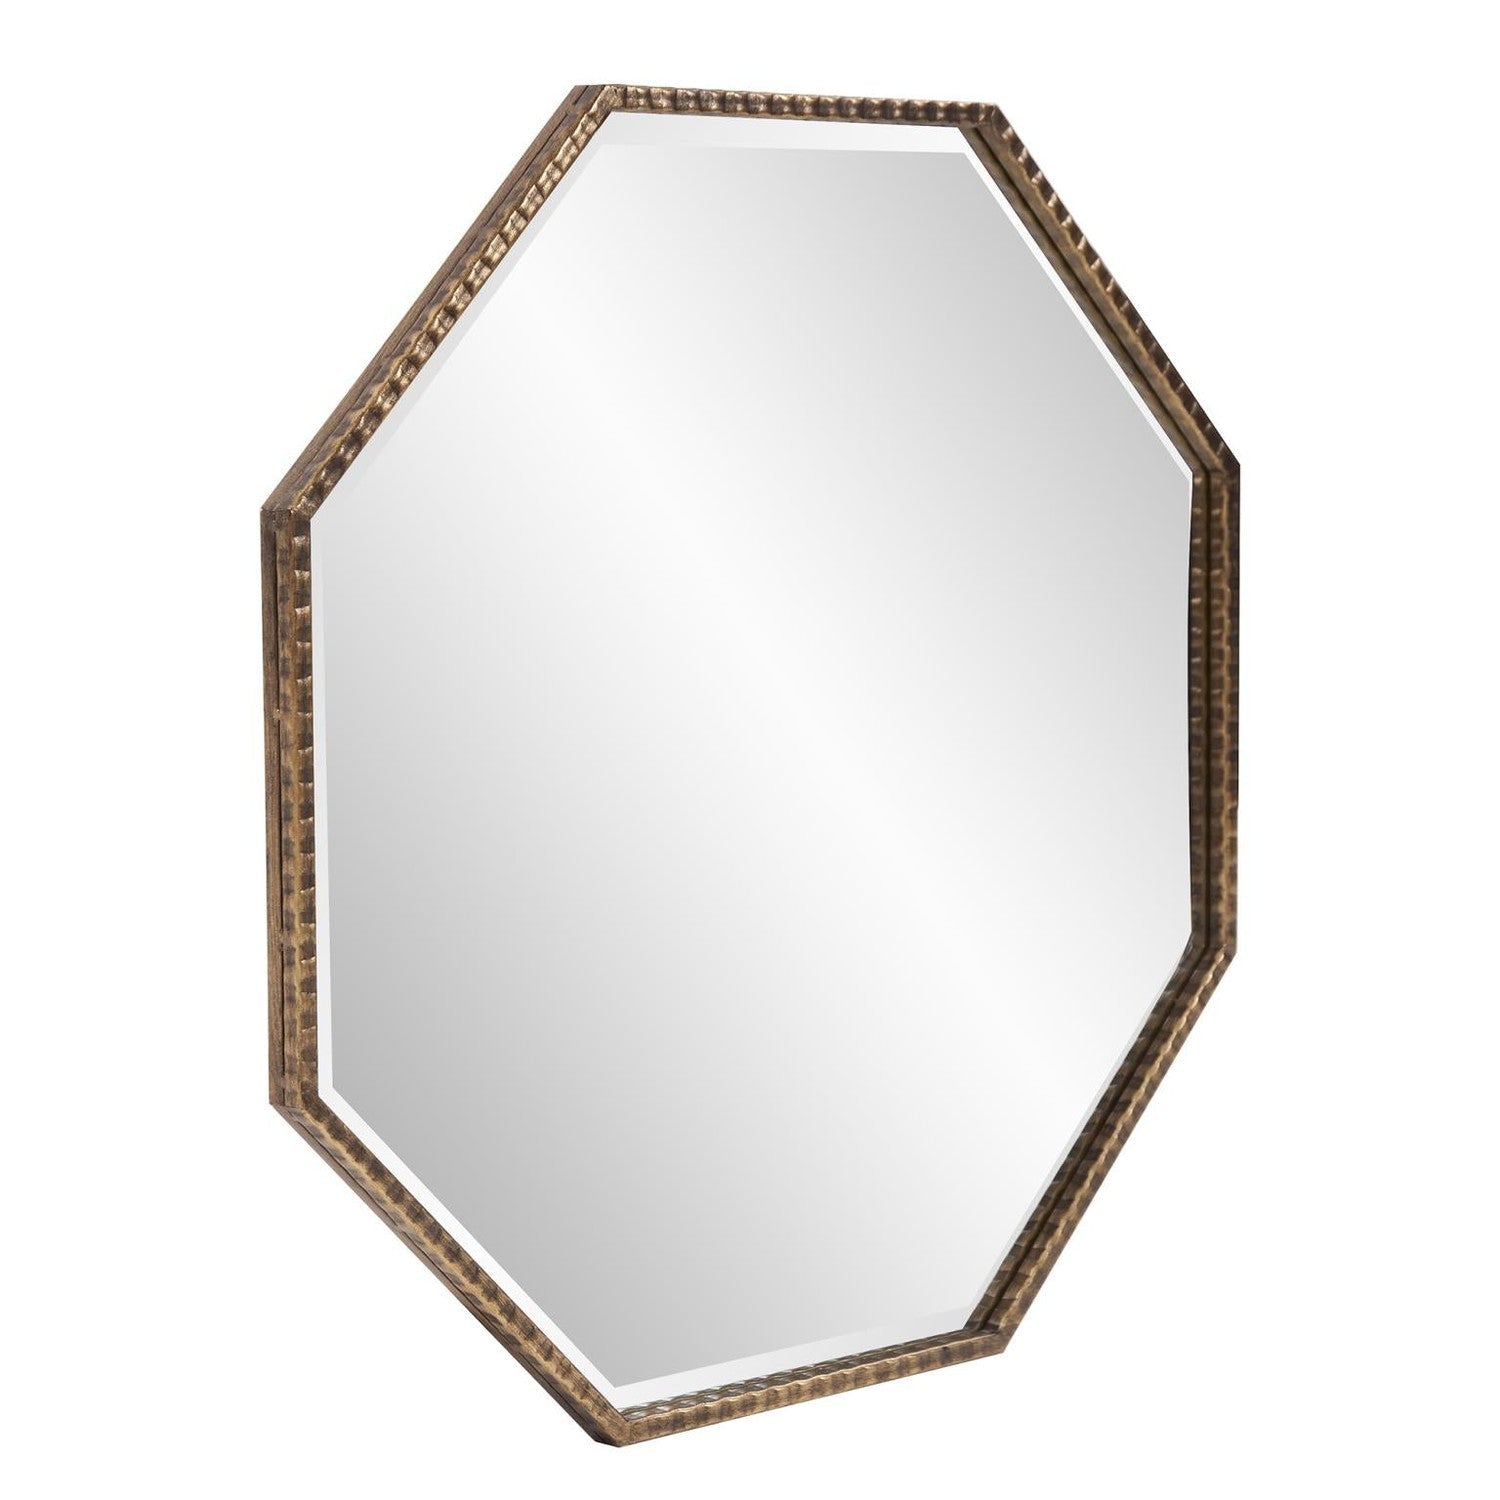 Bastian Octagon Mirror-The Howard Elliott Collection-HOWARD-19147-Mirrors-4-France and Son